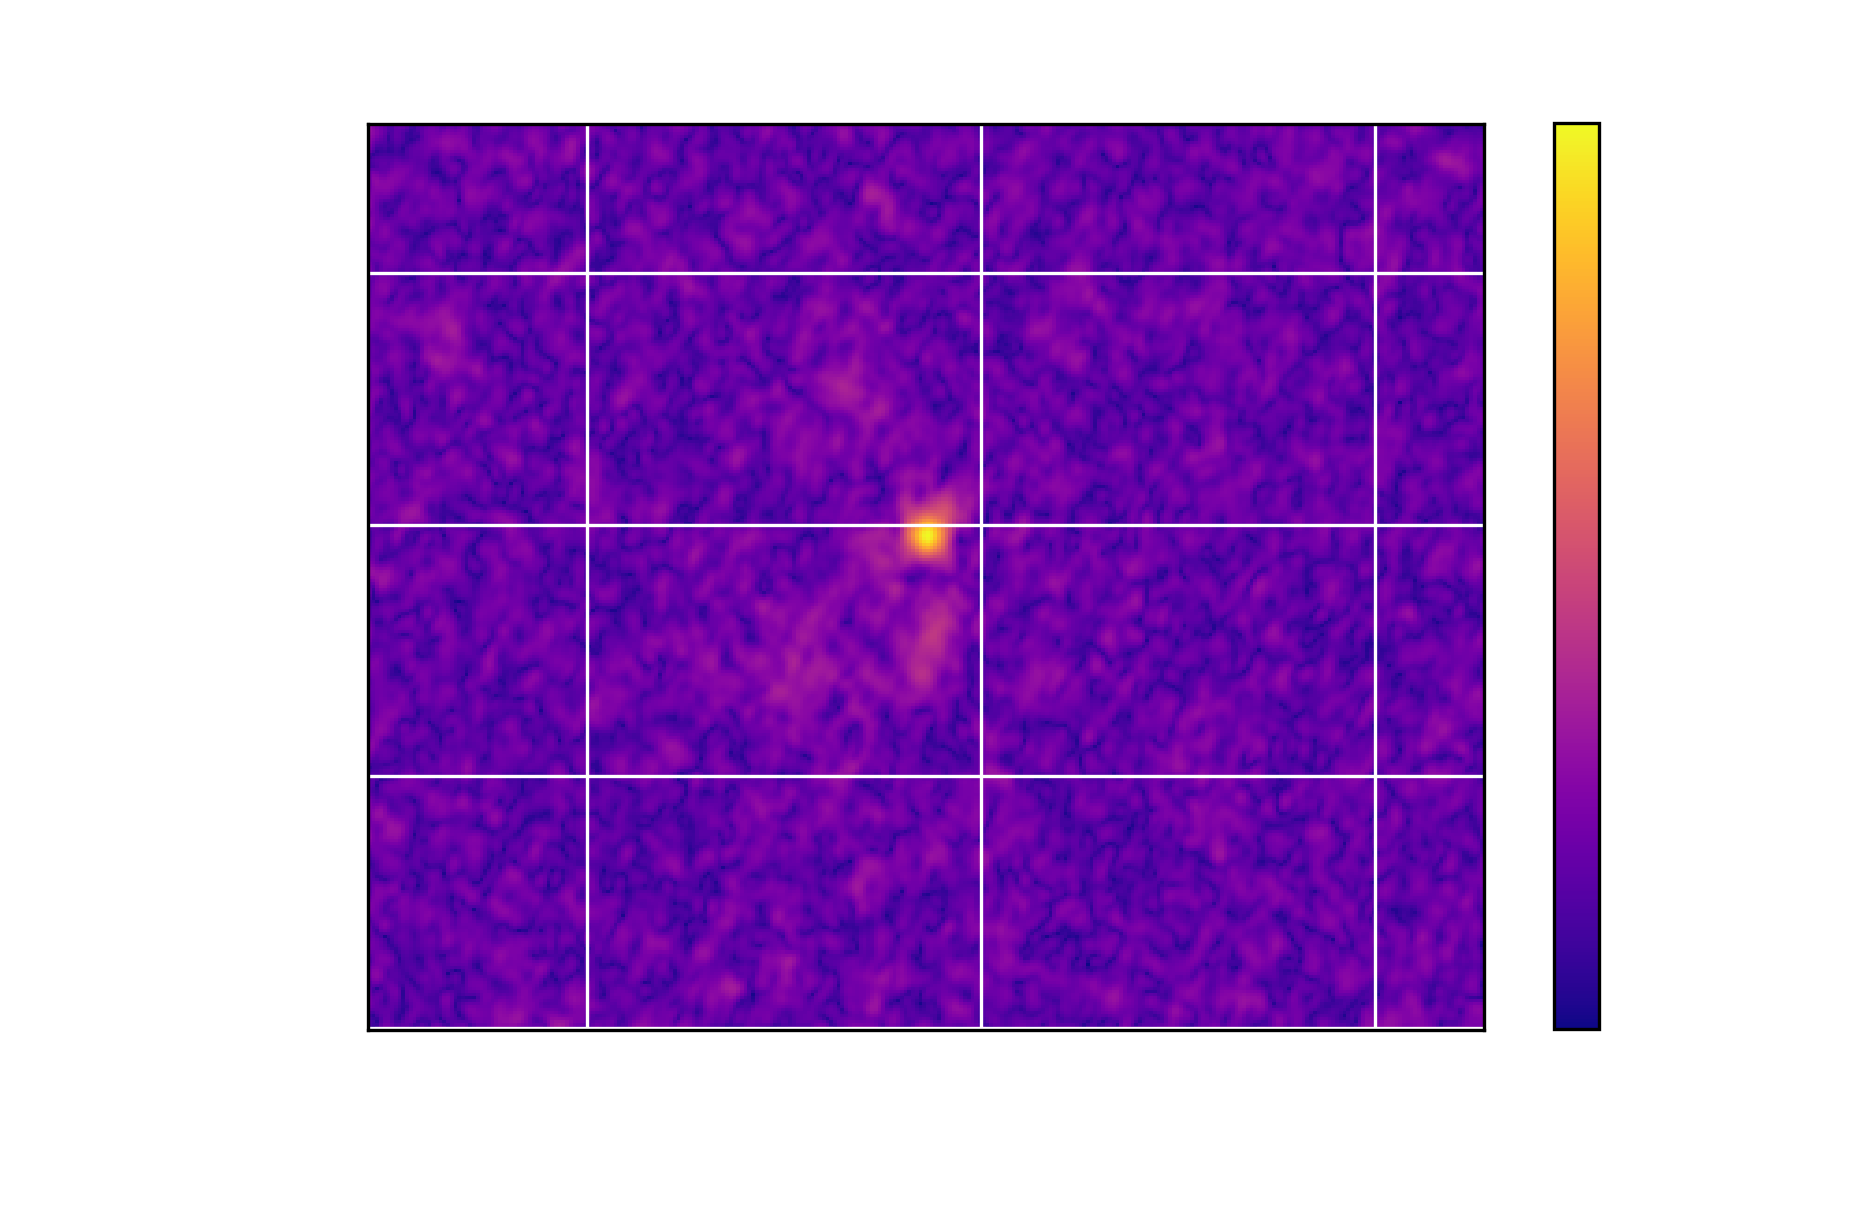 Polarization Intensity